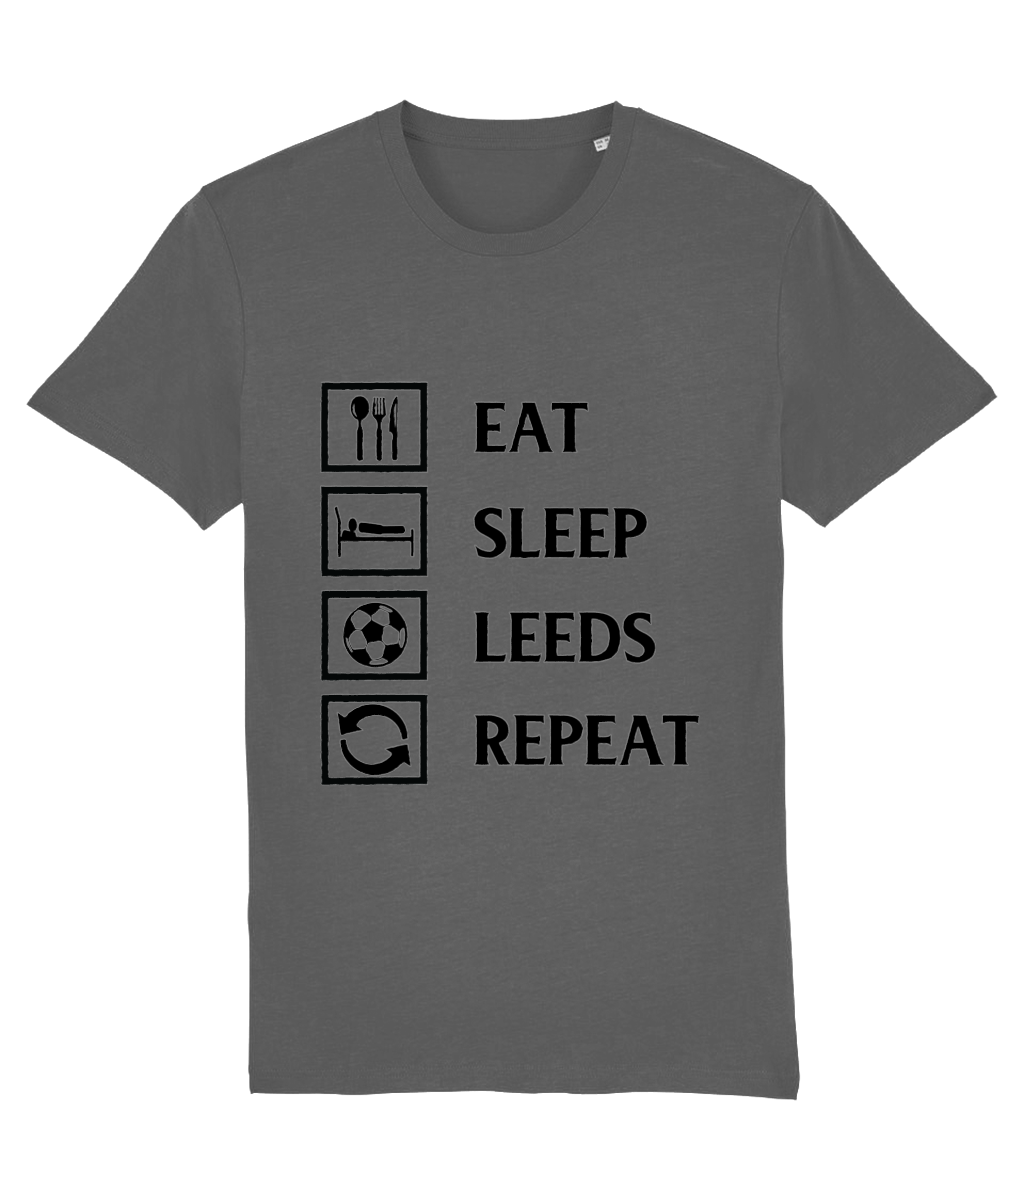 Eat, Sleep, Leeds, Repeat T-shirt Men